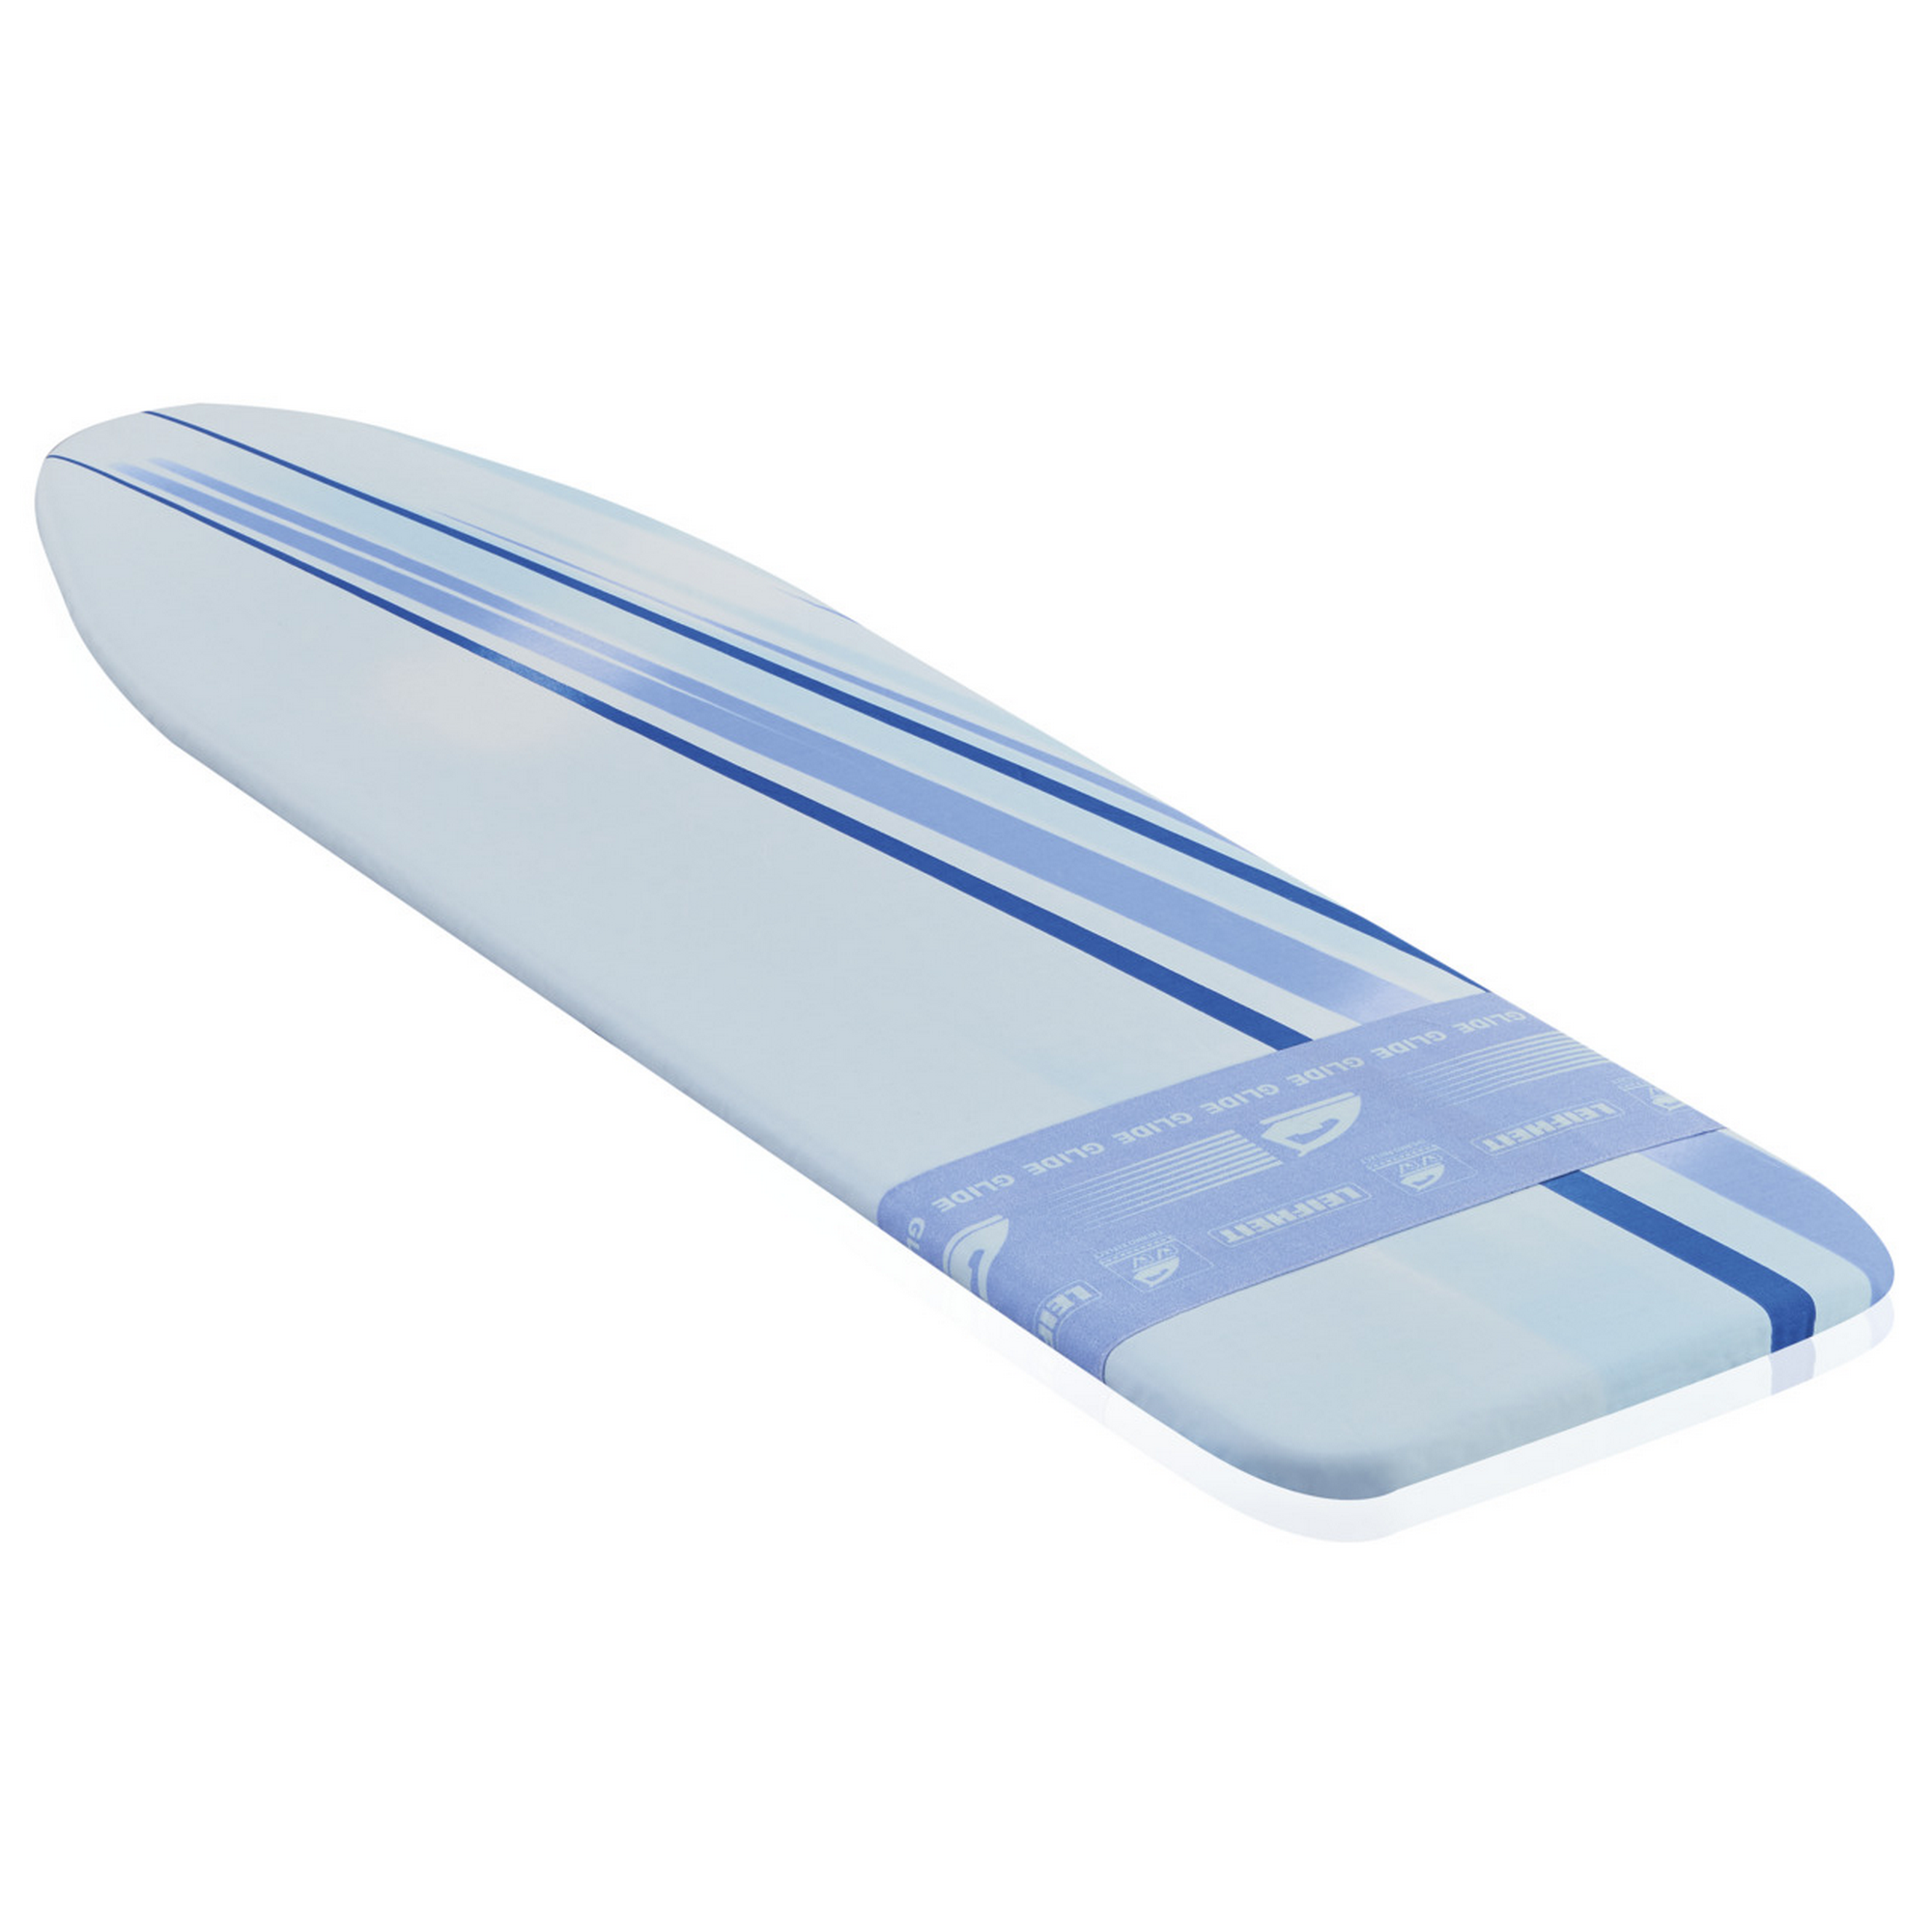 Bügeltischbezug 'Thermo Reflect Glide&Park Universal' 140 x 45 cm blau + product picture